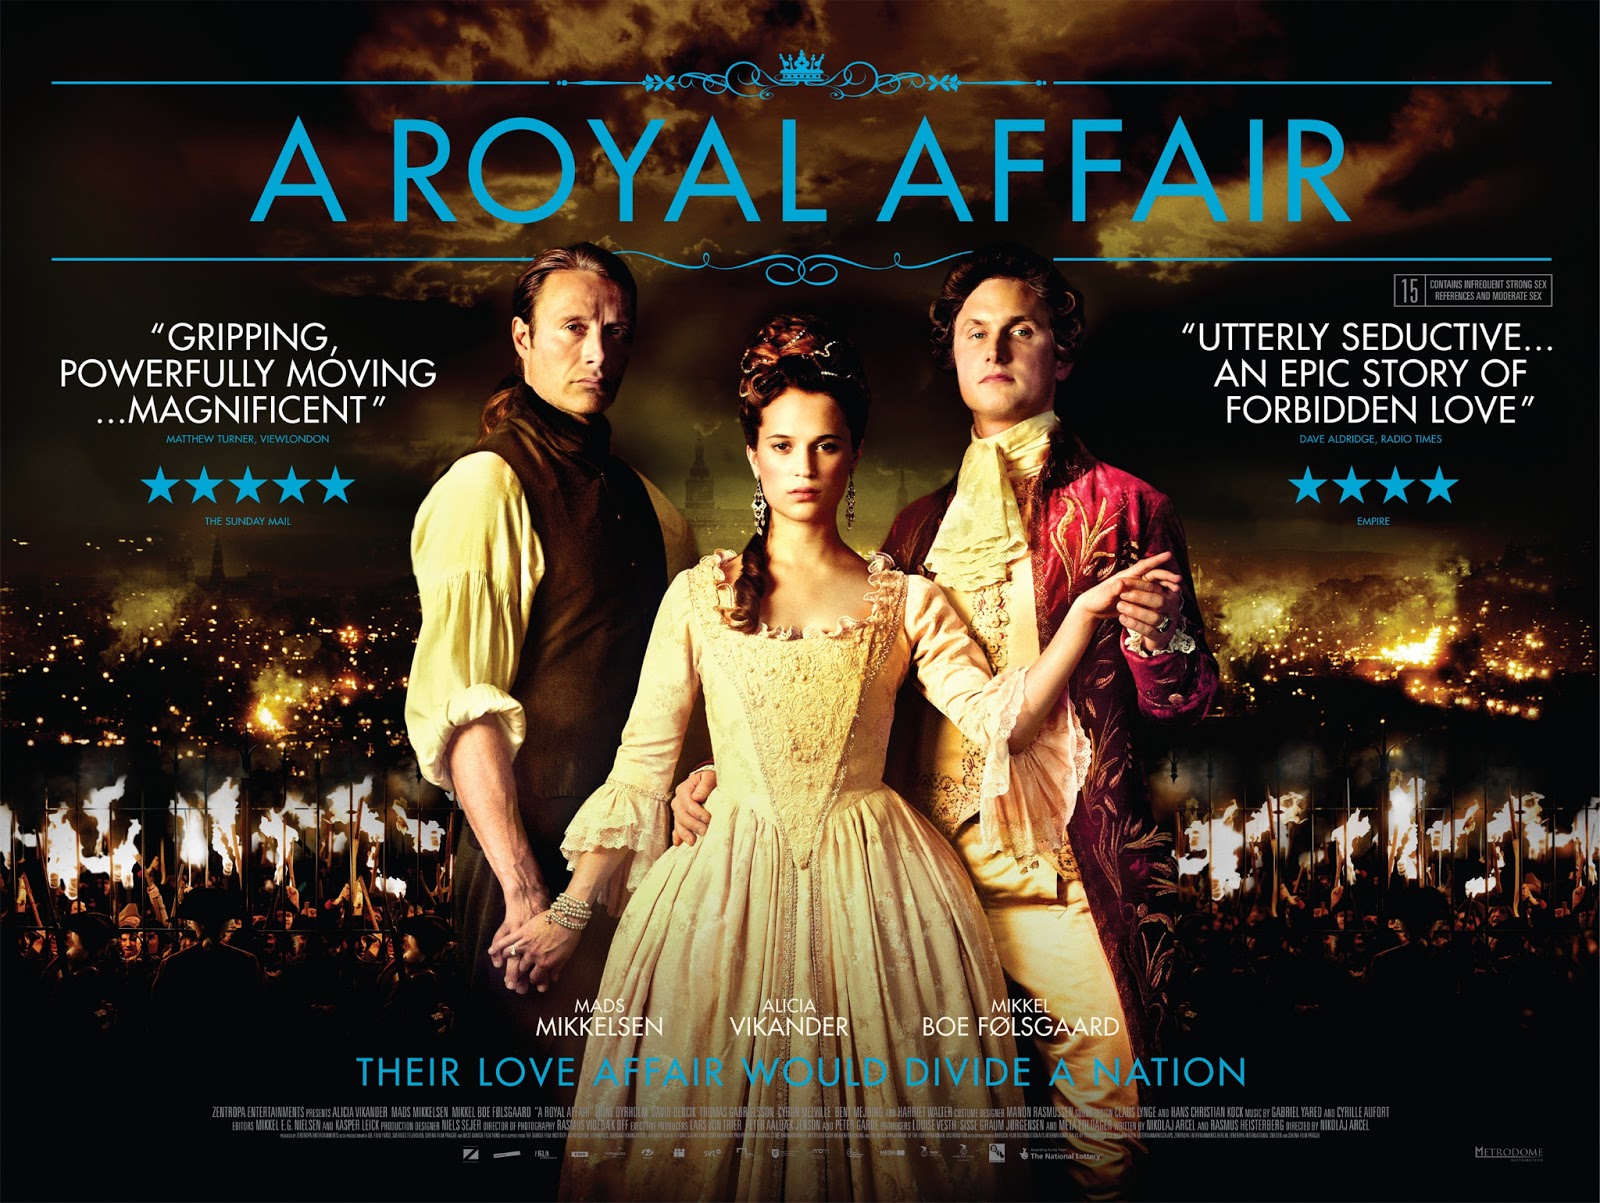 2013 Oscar Week: More Royal Than Affair